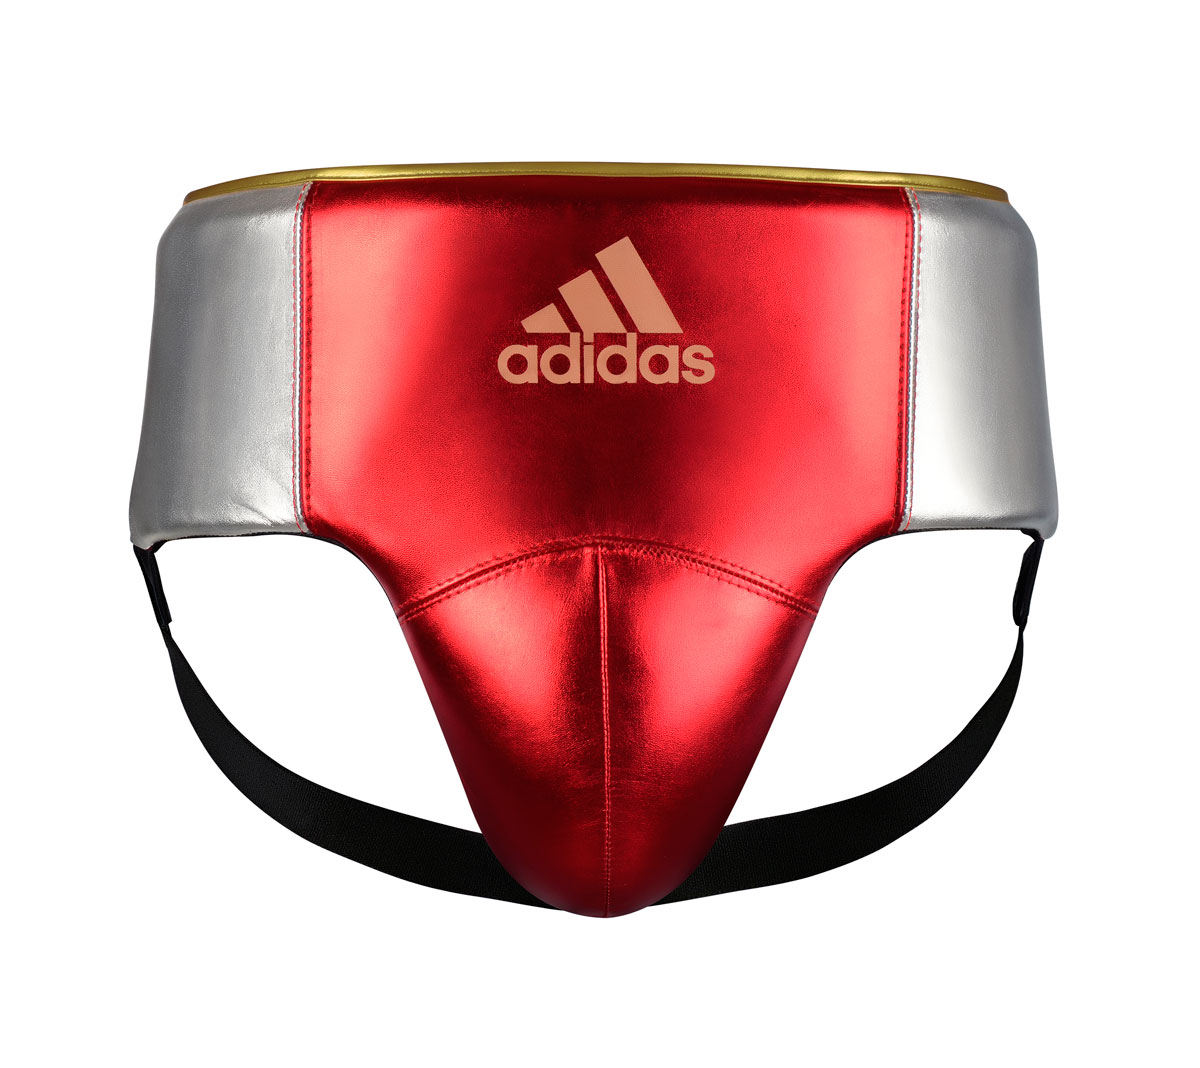 Защита паха мужская Adidas AdiStar Pro Мetallic Groin Guard красно-серебристо-золотая 1200_1068